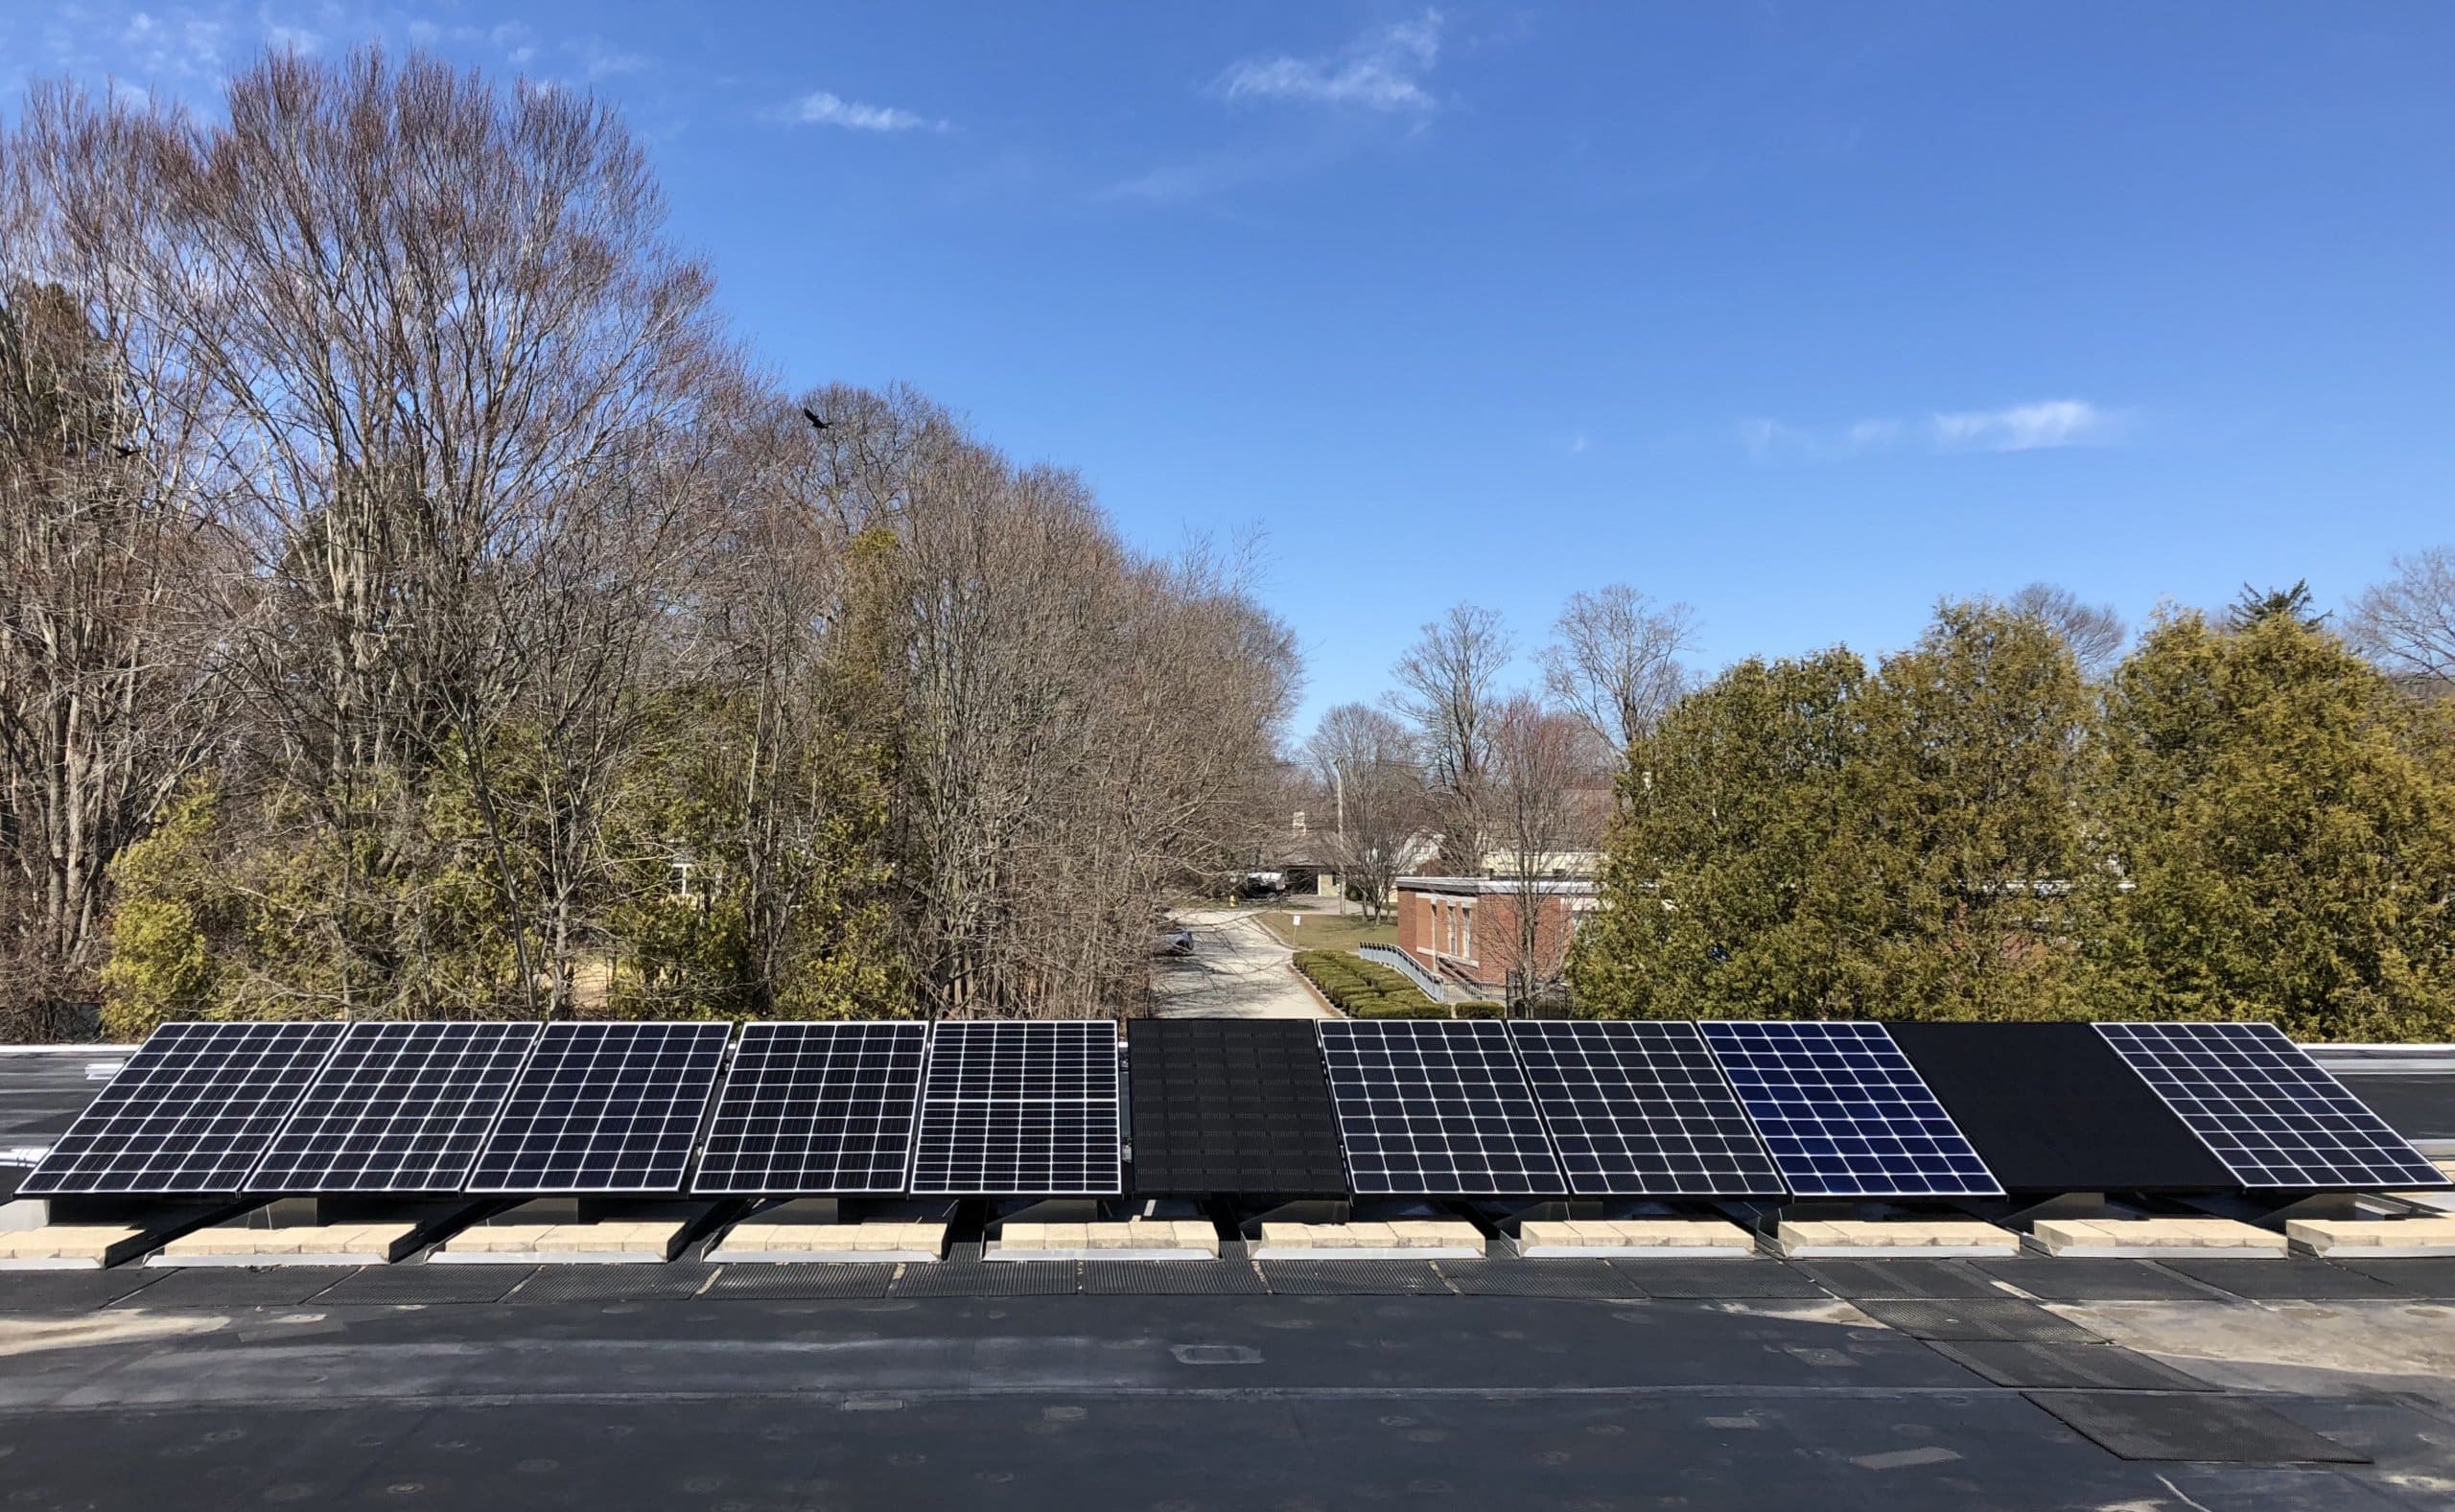 Hingham High School's solar array, donated by My Generation Energy, a Massachusetts solar installer